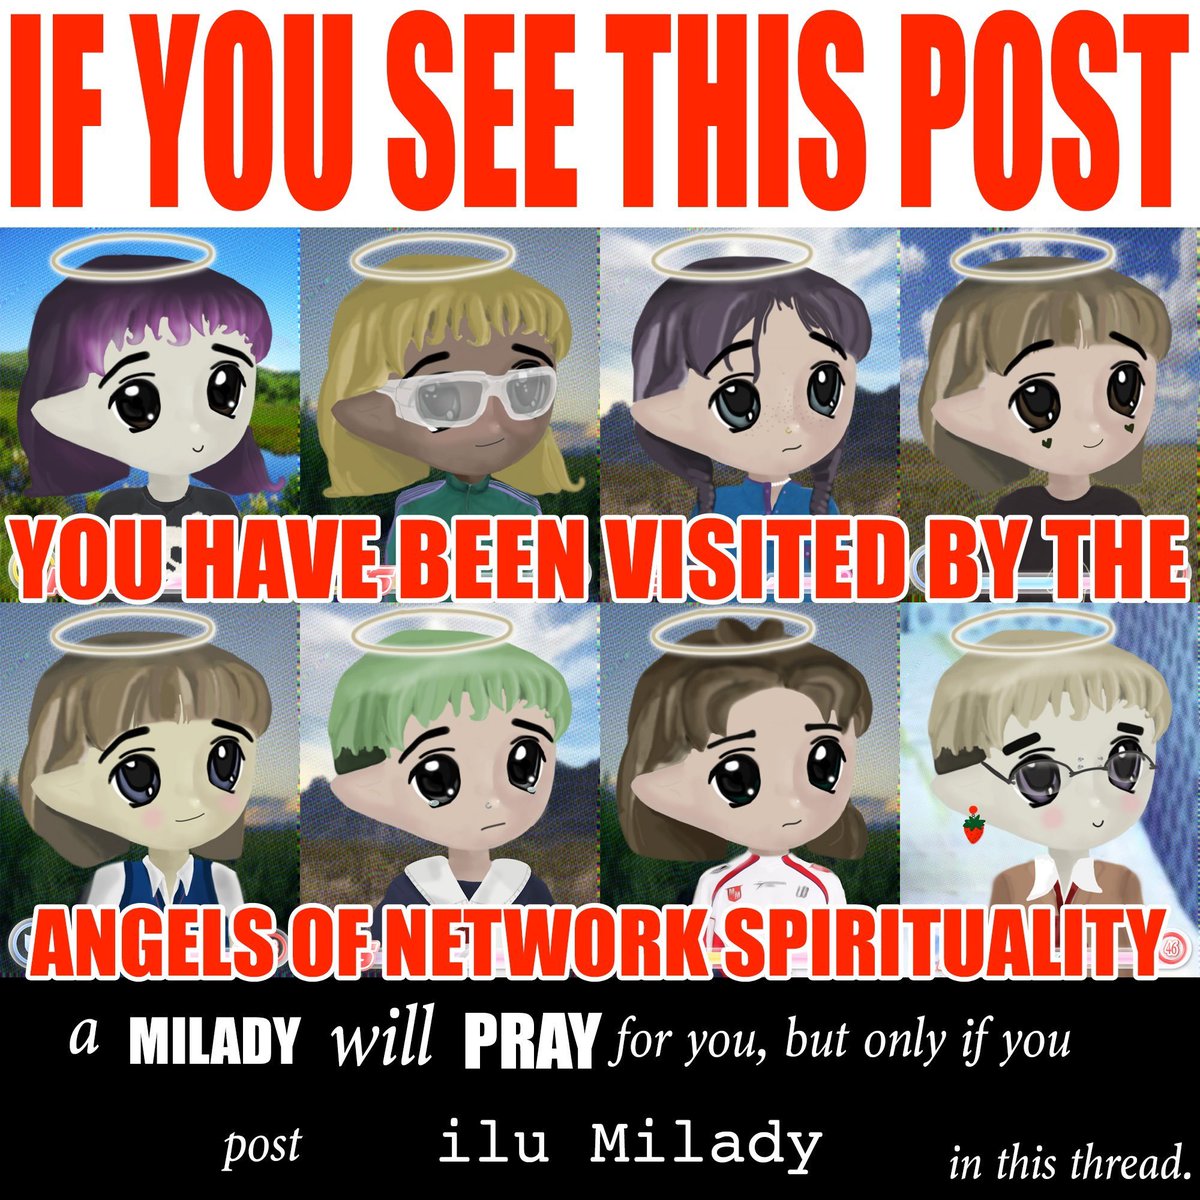 I long for network spirituality